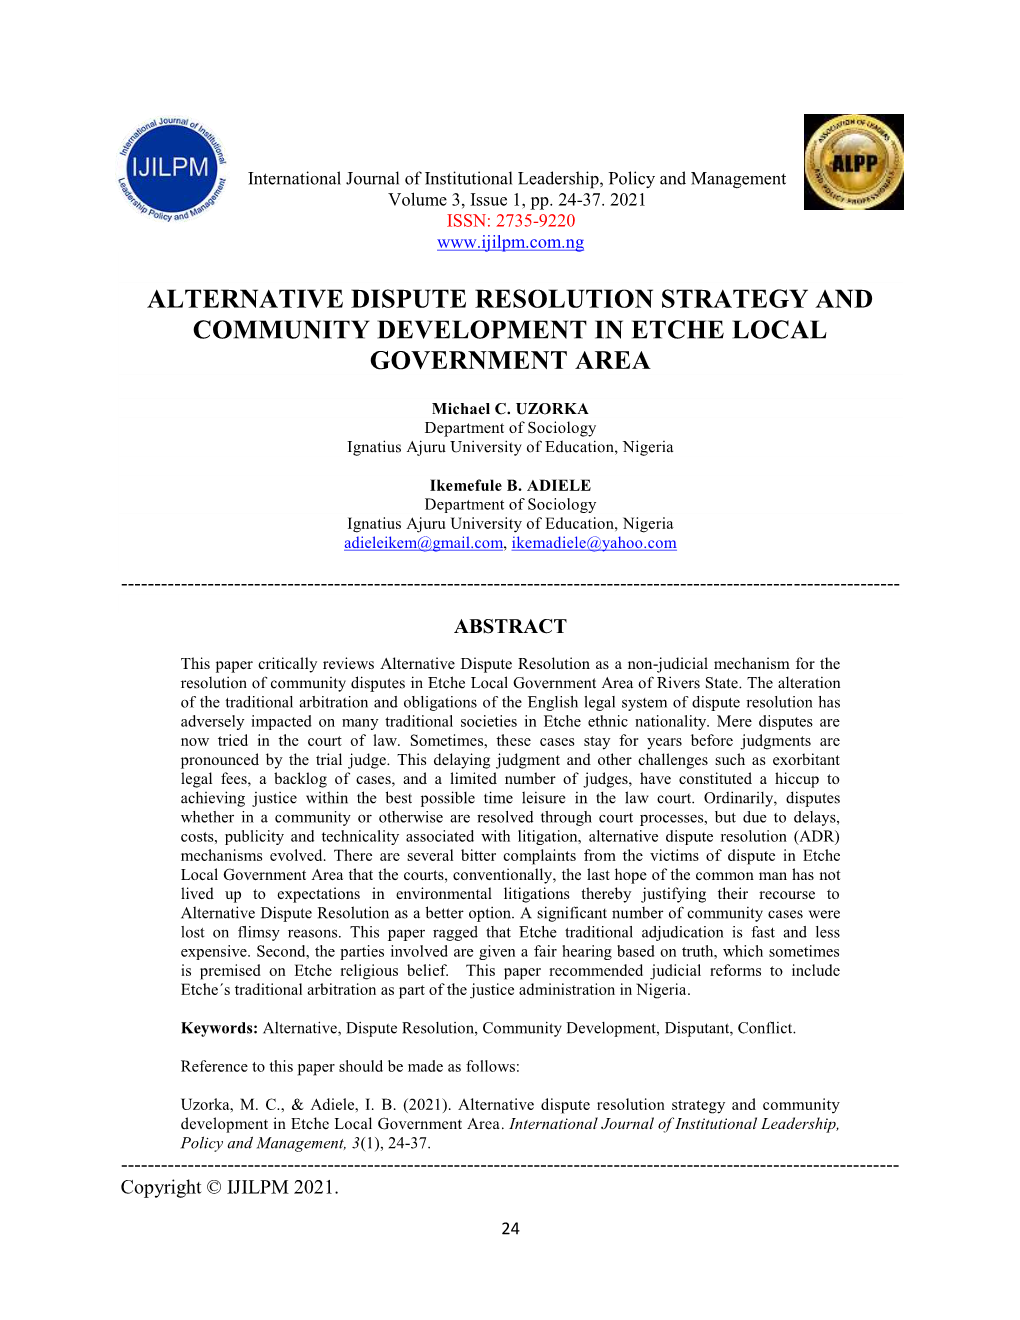 Alternative Dispute Resolution Strategy and Community Development in Etche Local Government Area